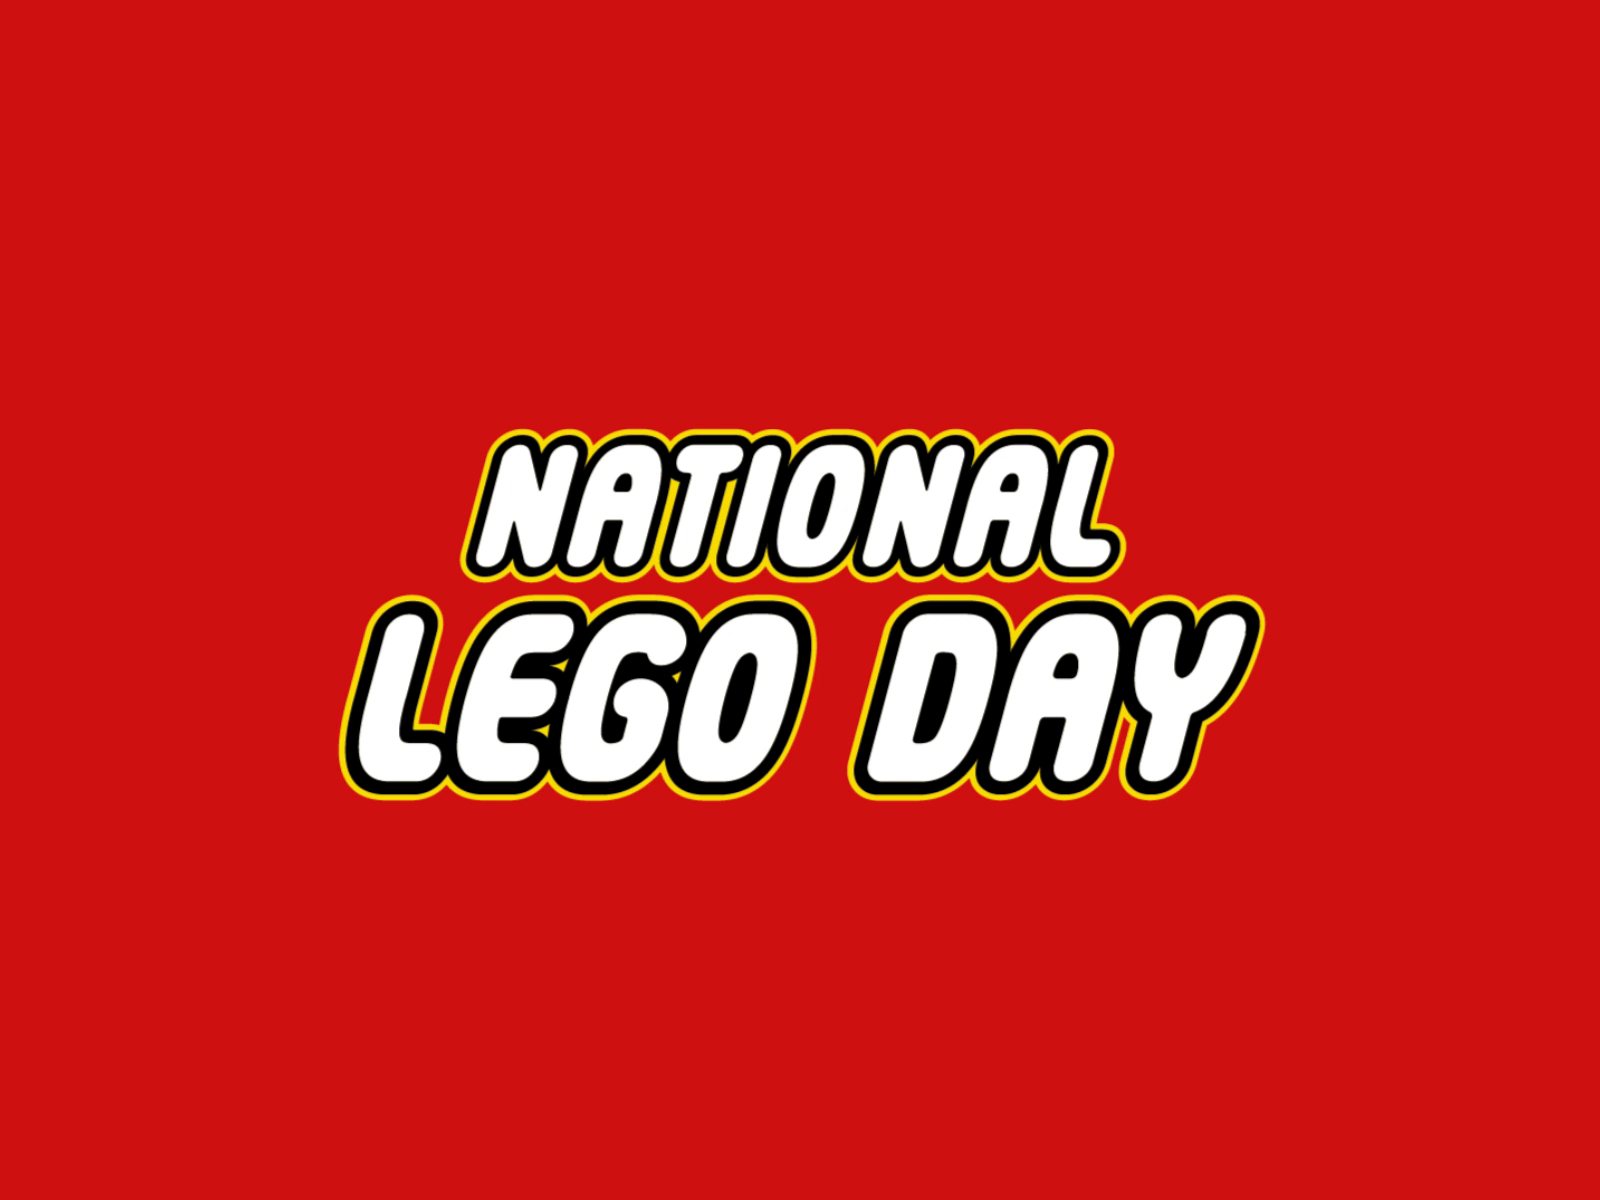 National LEGO Day by Gabriela Sanchez on Dribbble